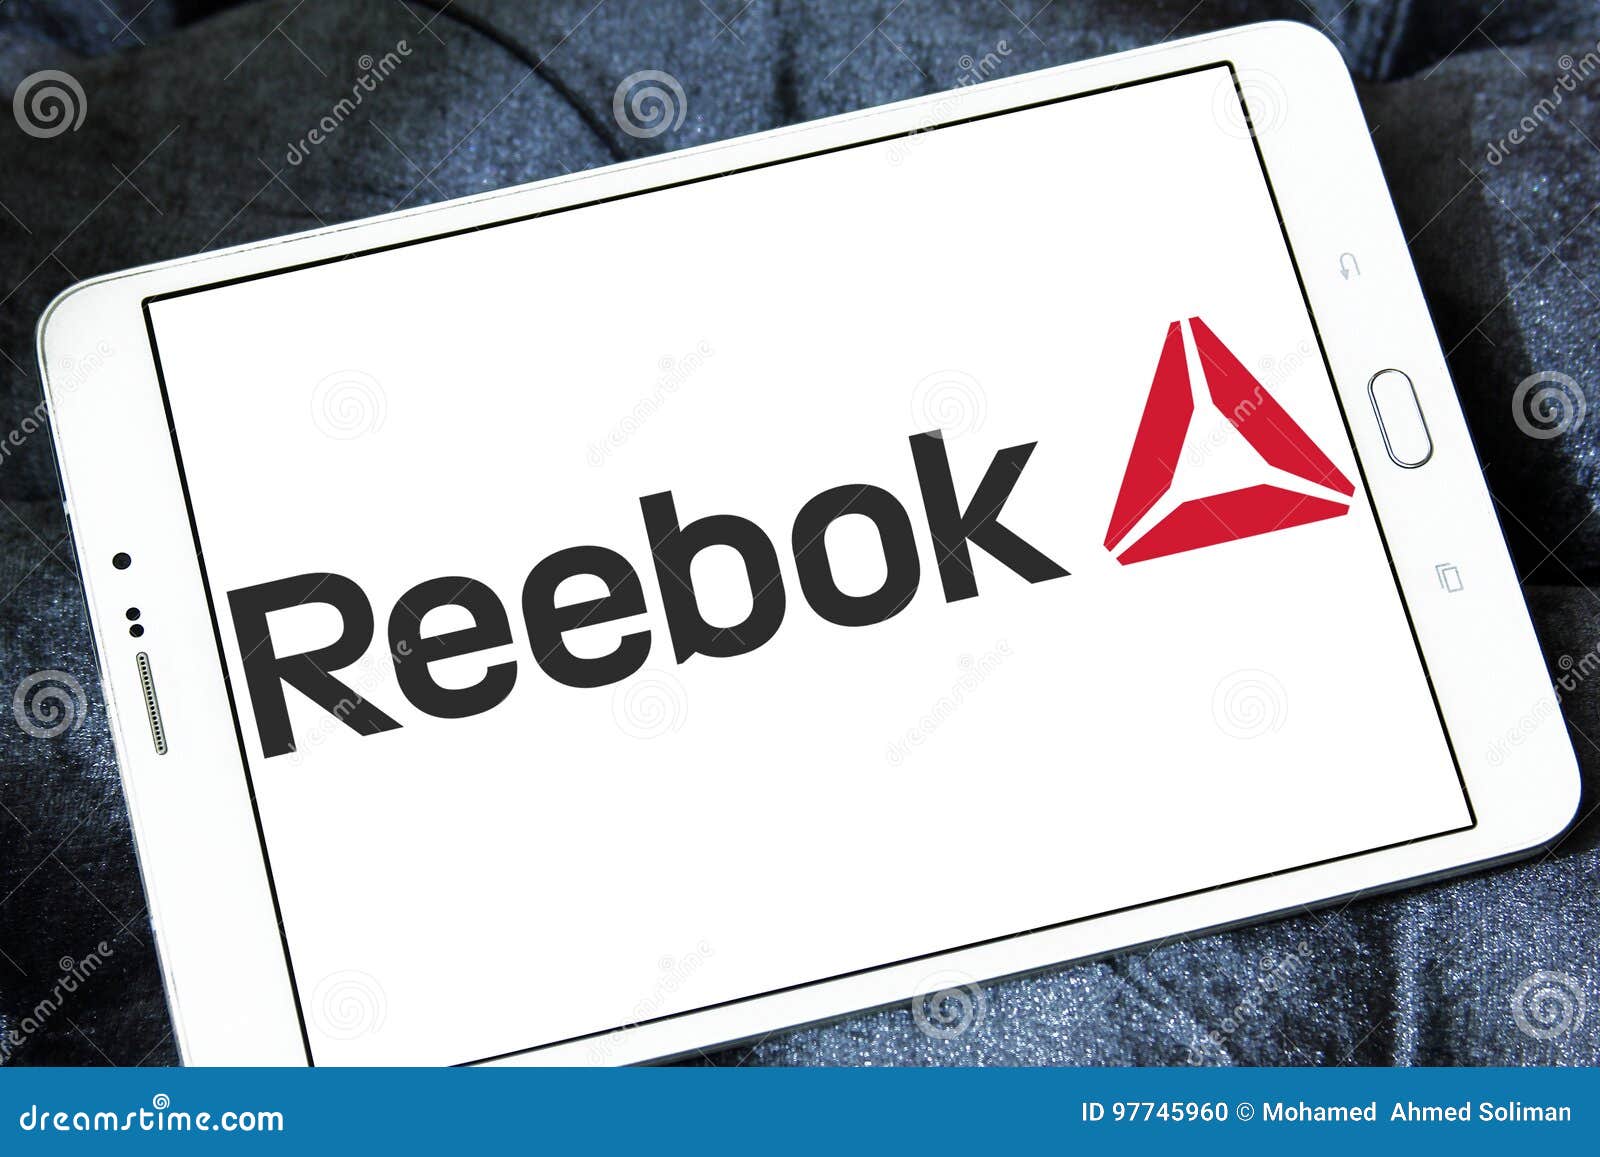 Reebok商标编辑类图片 图片包括有reebok商标 97745960